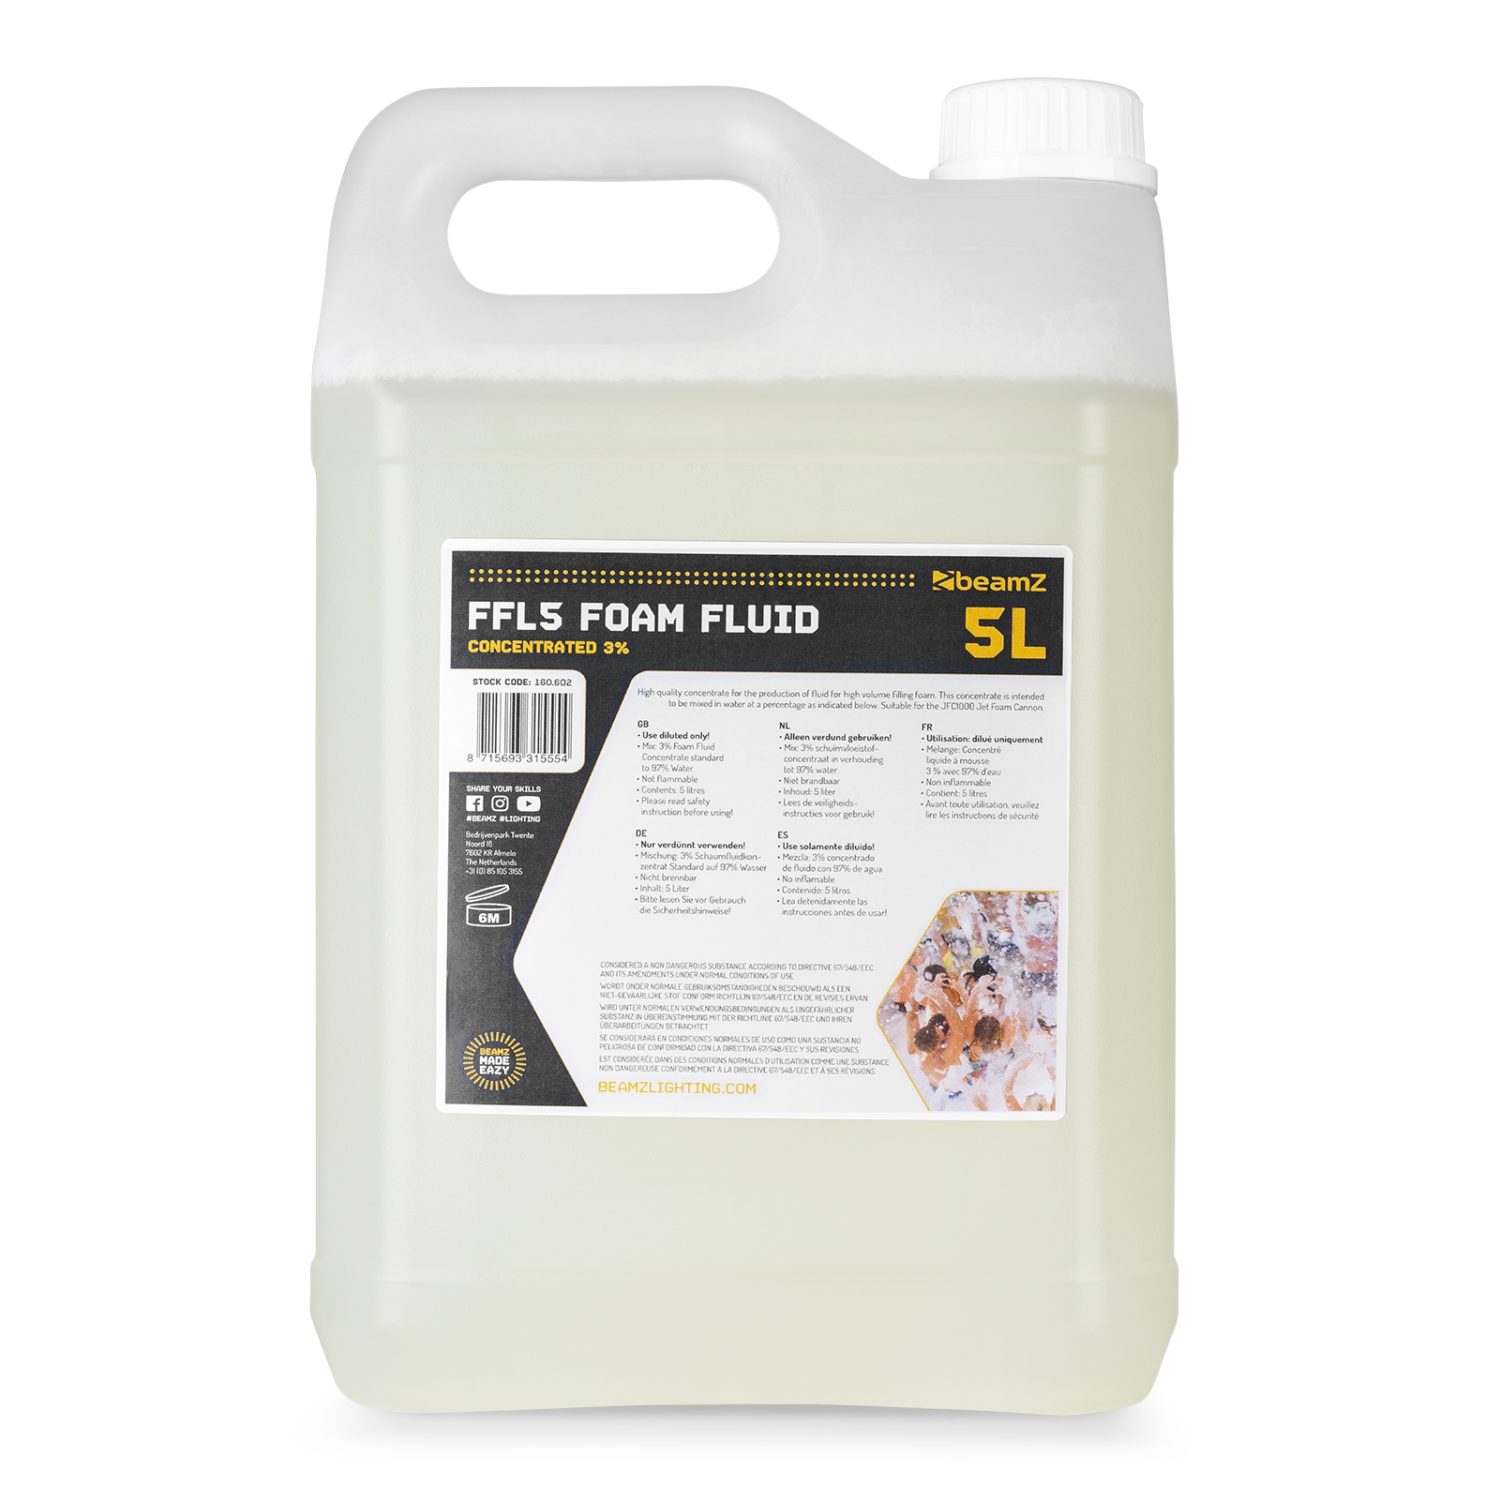 FFL5 Foam Fluid 5L Concentrated - beamZ